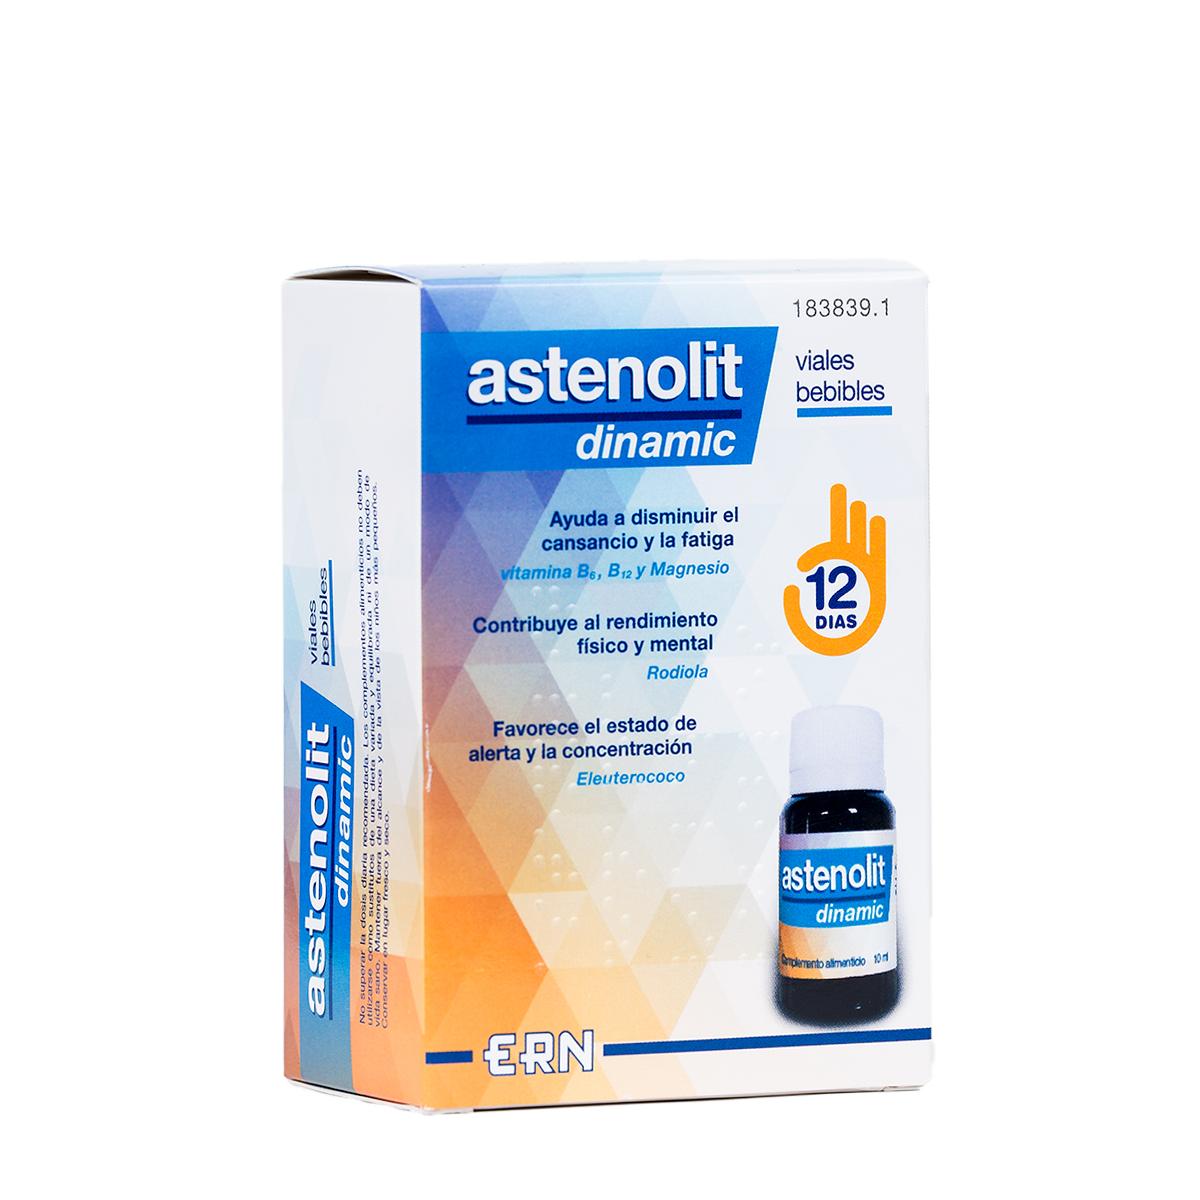 Astenolit - Astenolit dinamic viales bebibles 12 viales bebibles